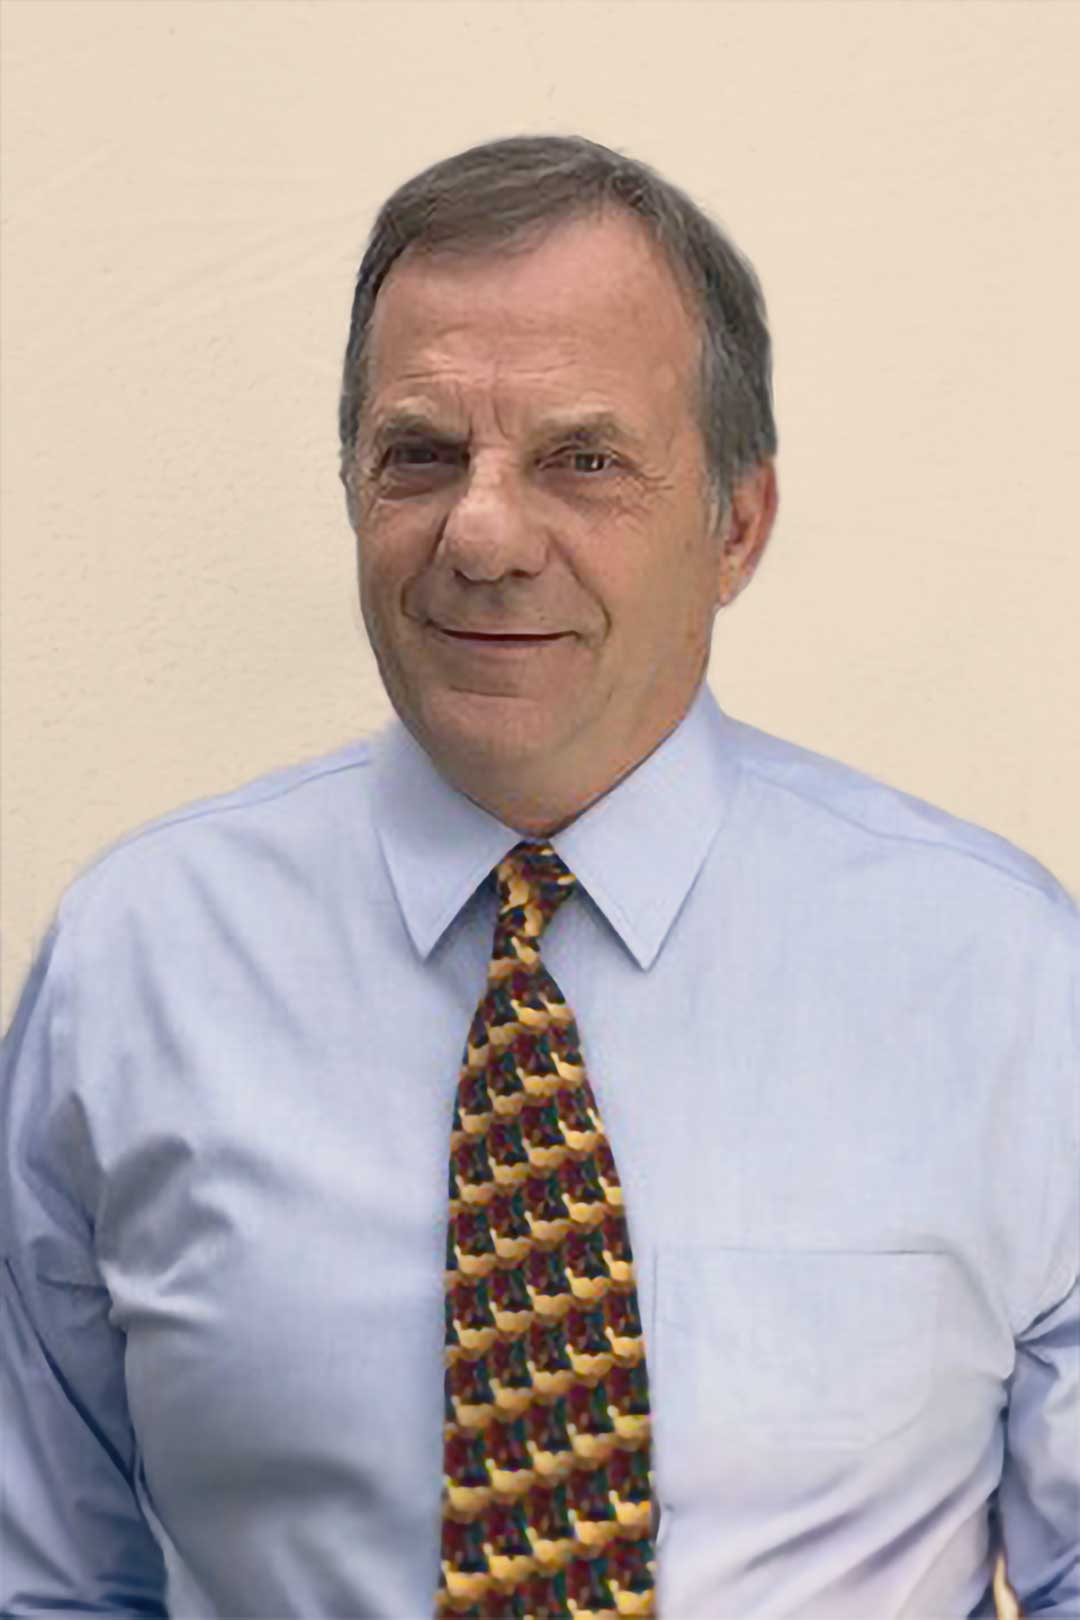  Dr. John Glantz, PhD